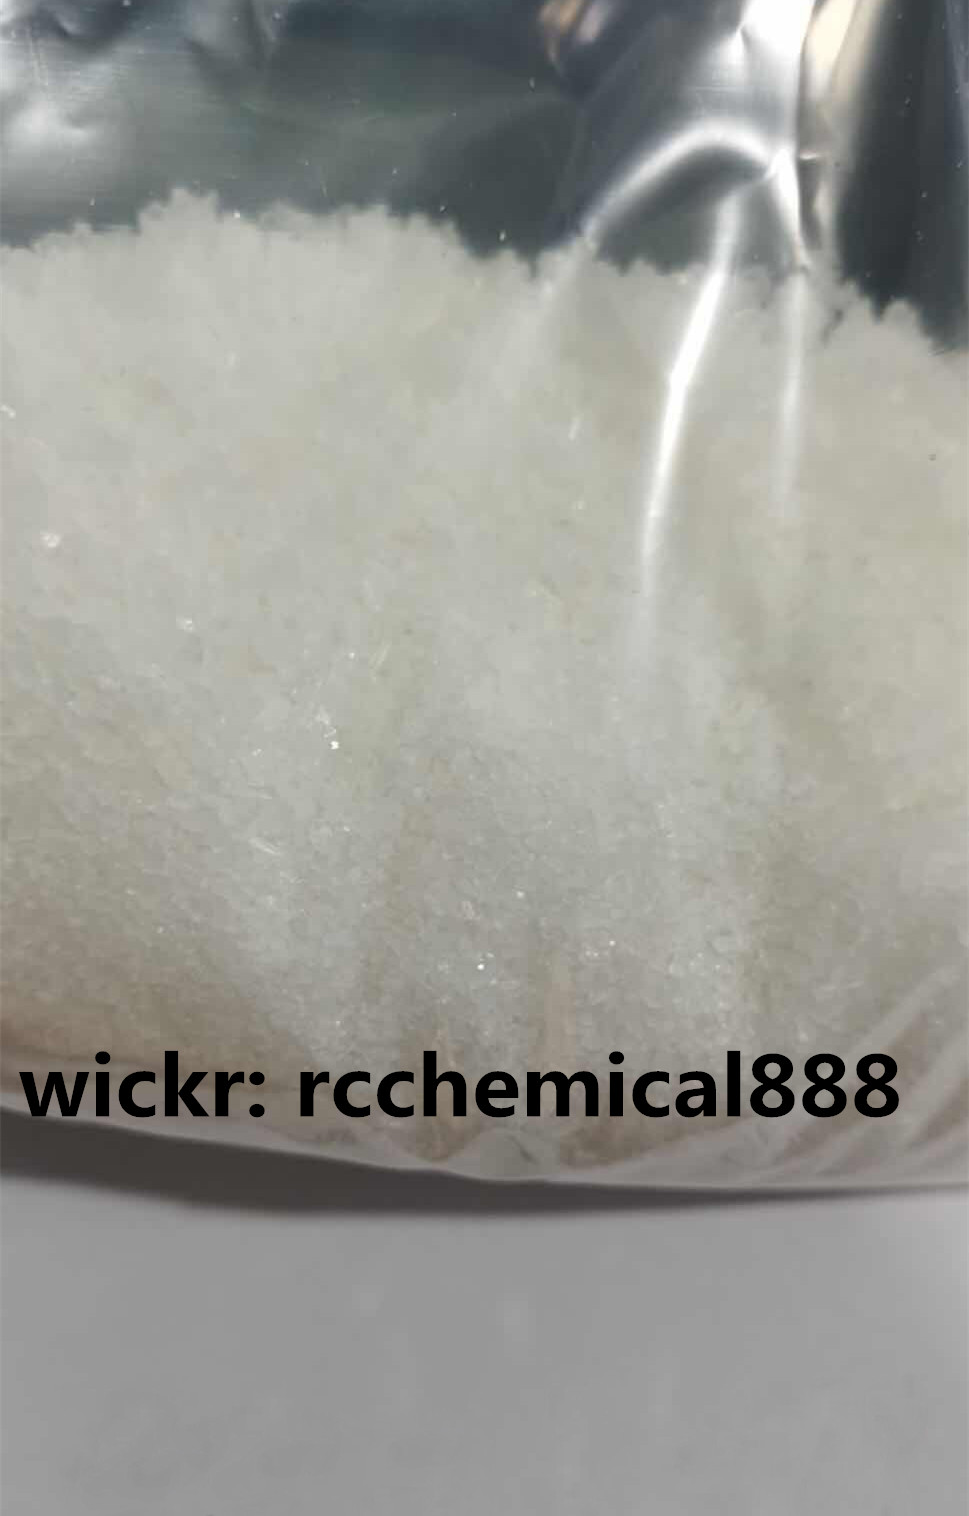 2FDCK crystal 2-FDCK crystallien powder in China (annie@xtaomeng.com)